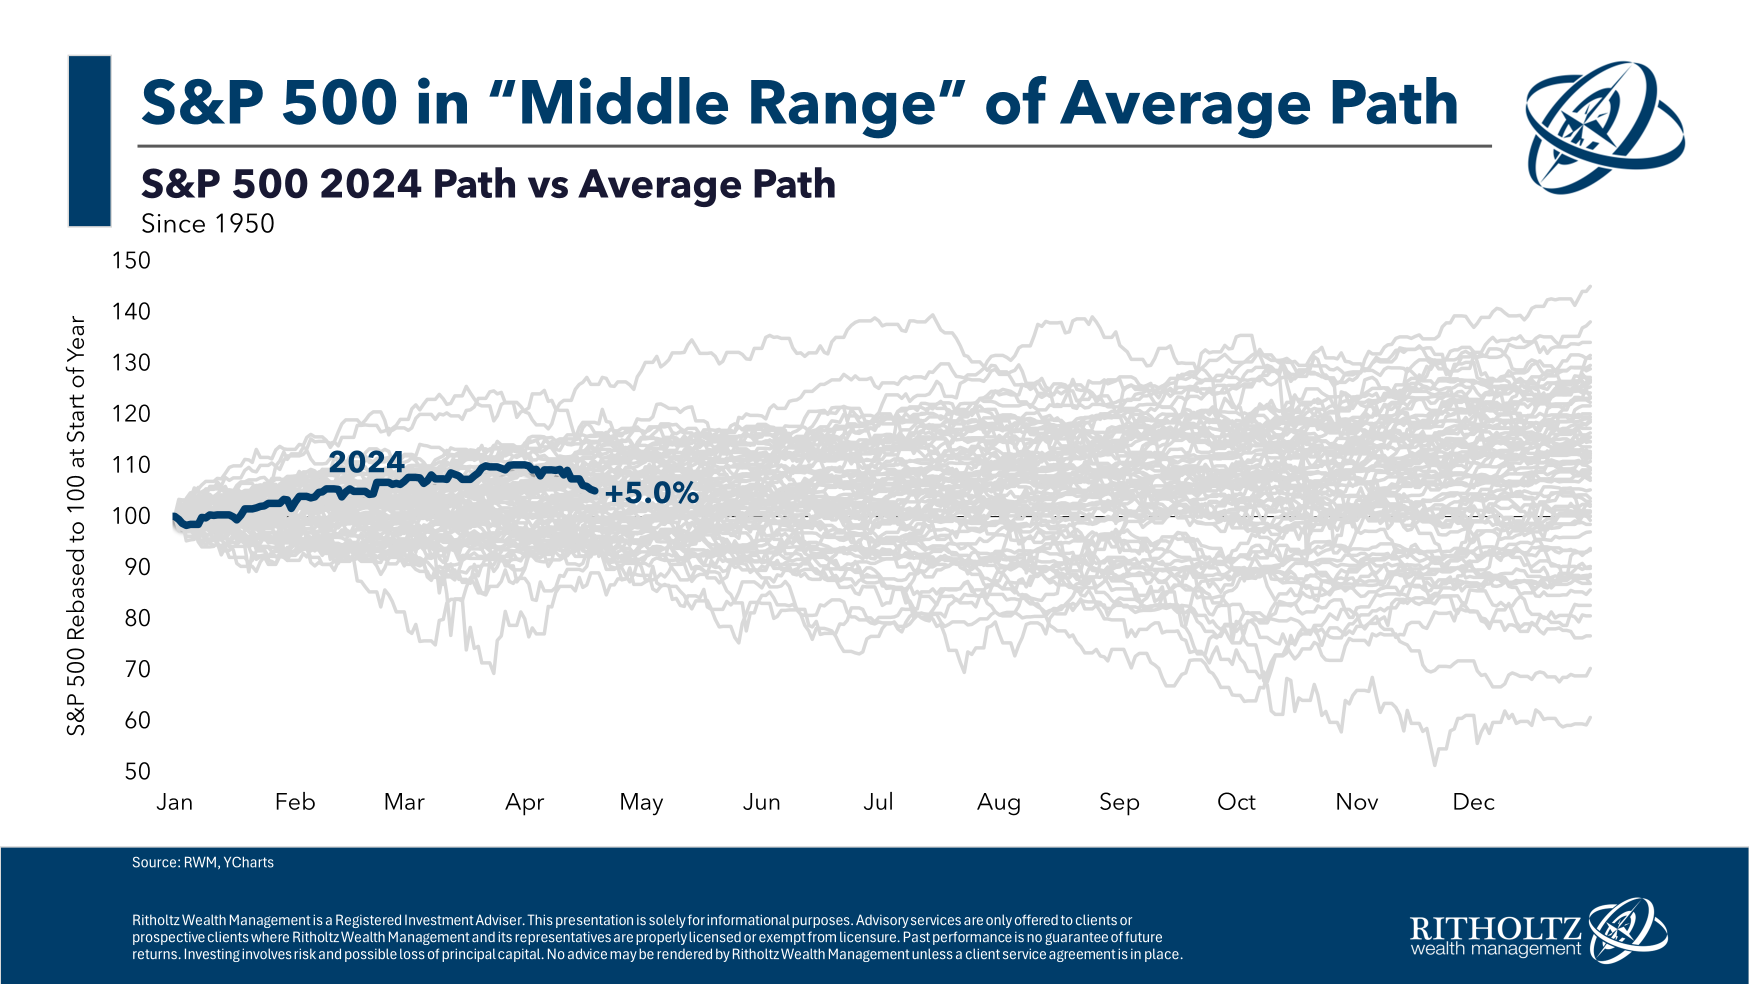 S&P 500 Average Path